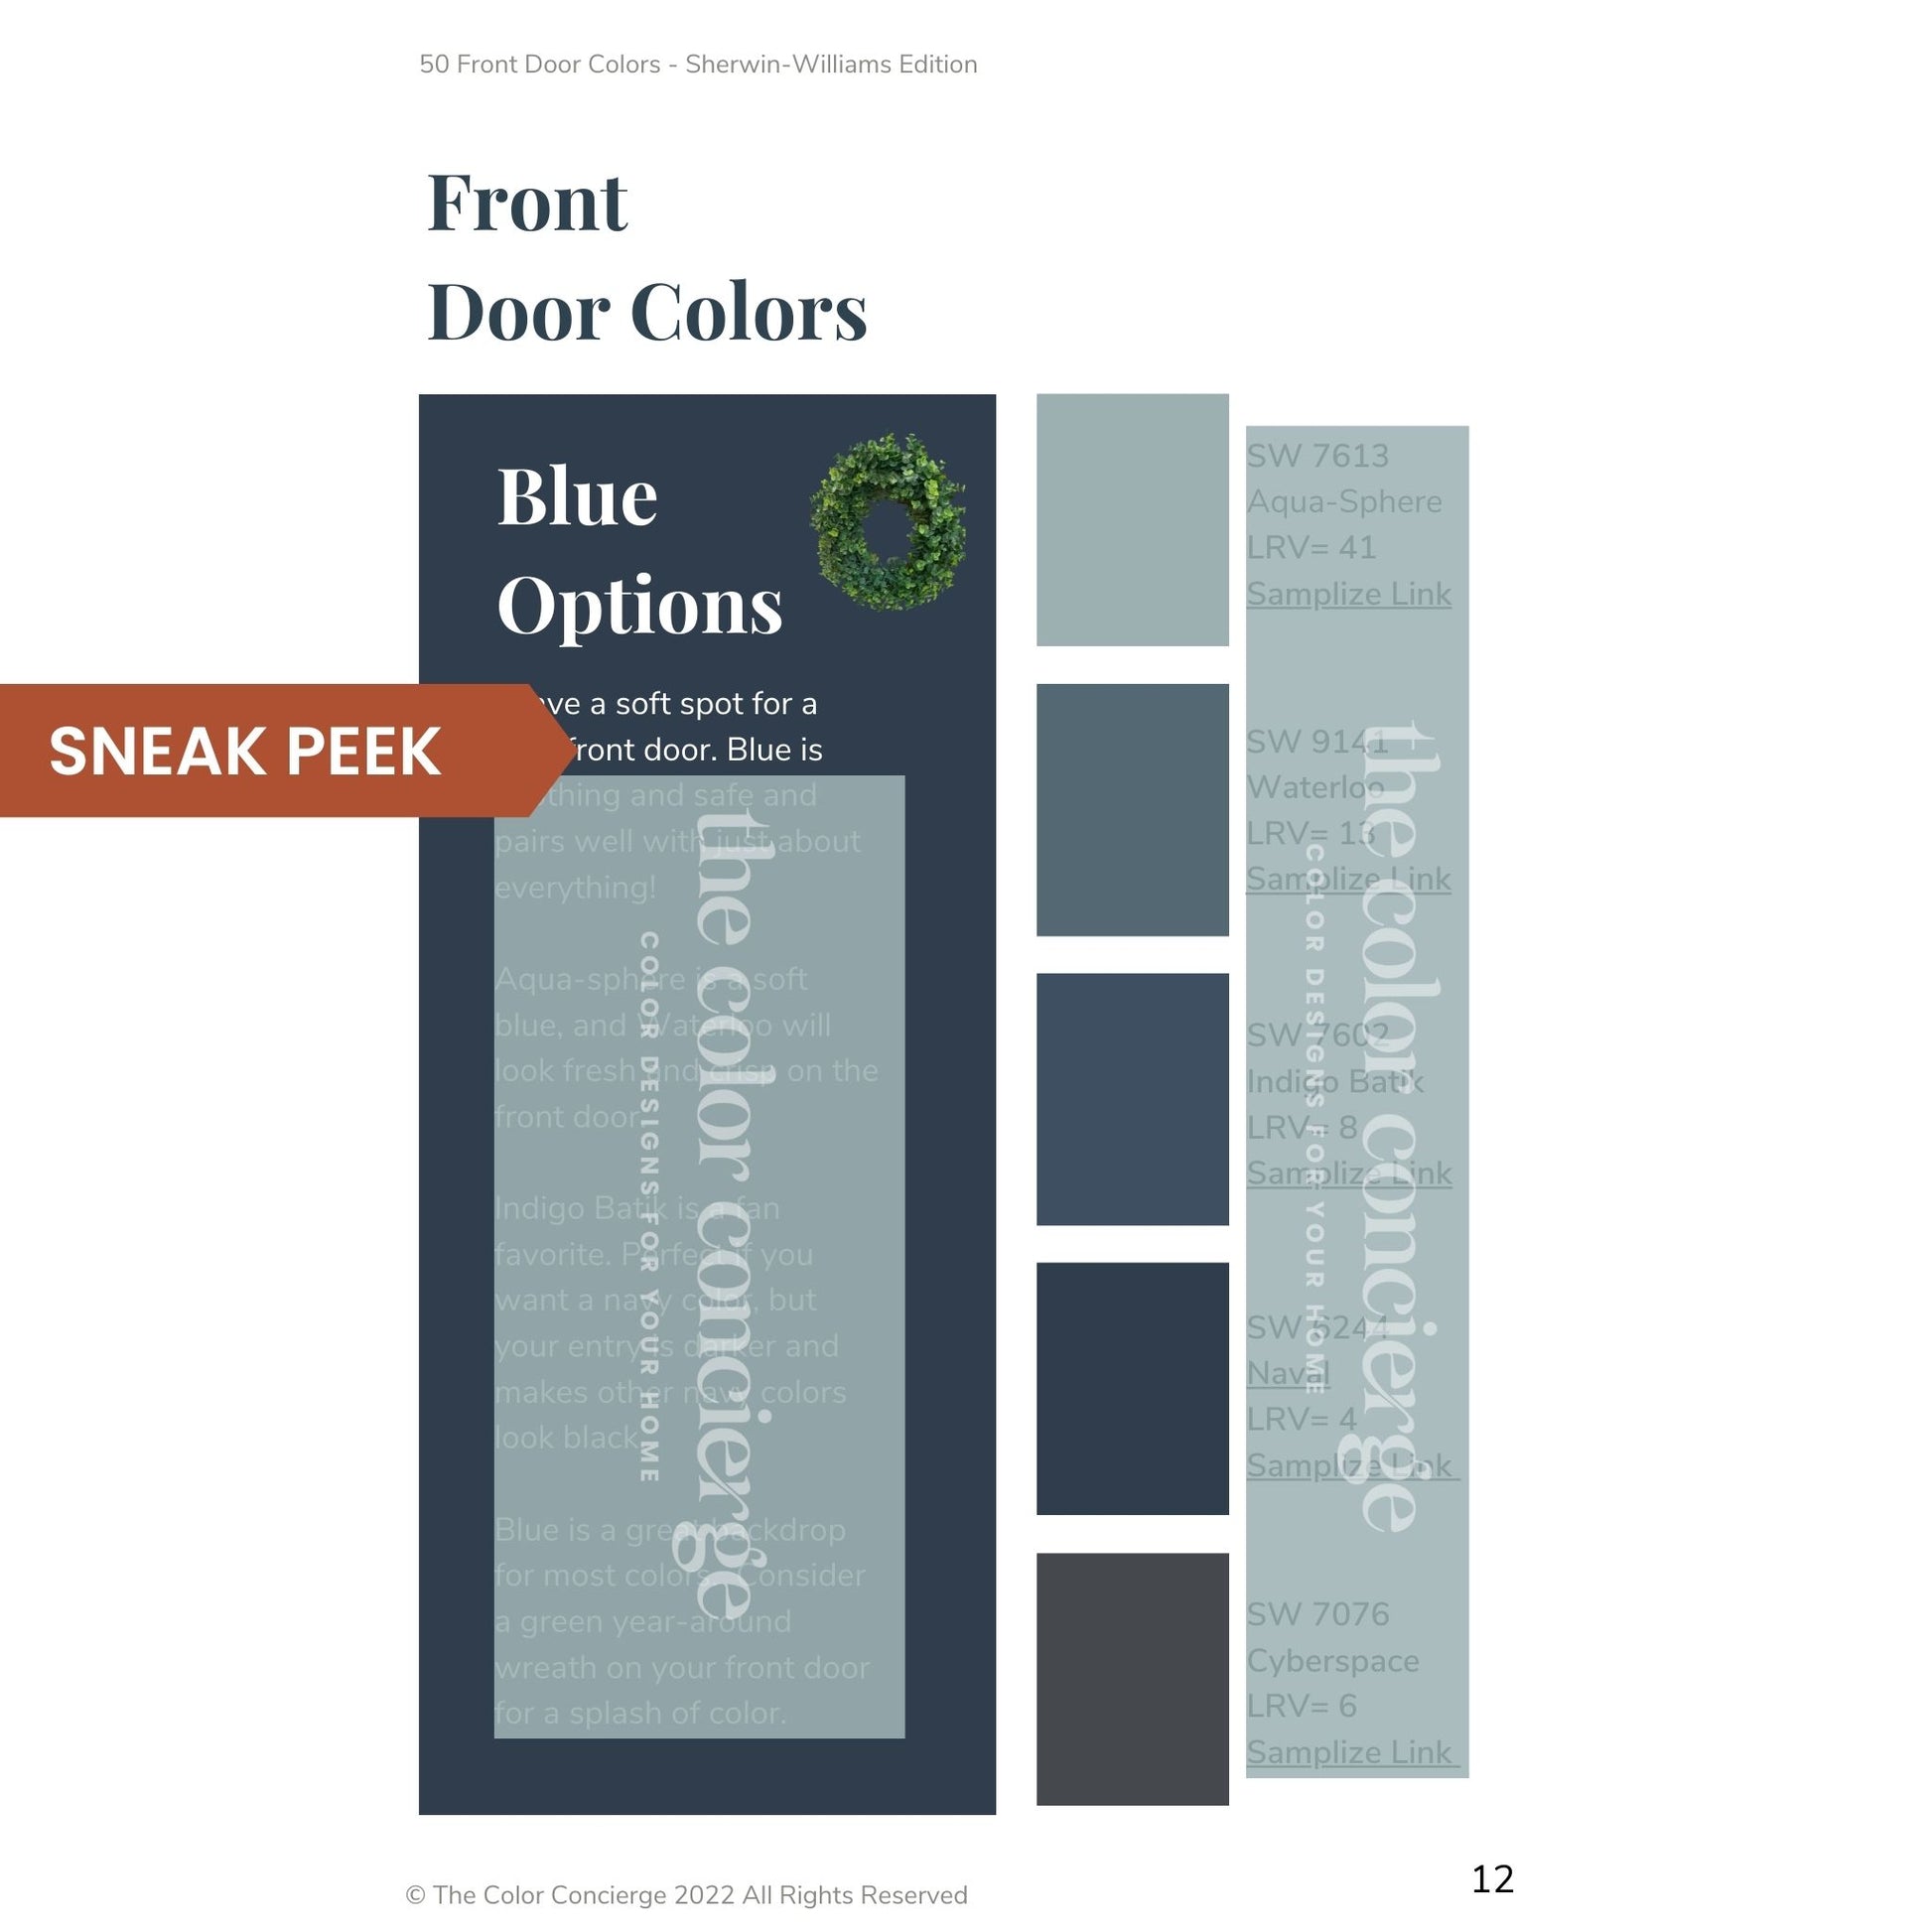 A sneak peek of the Sherwin-Williams best front door paint colors guide